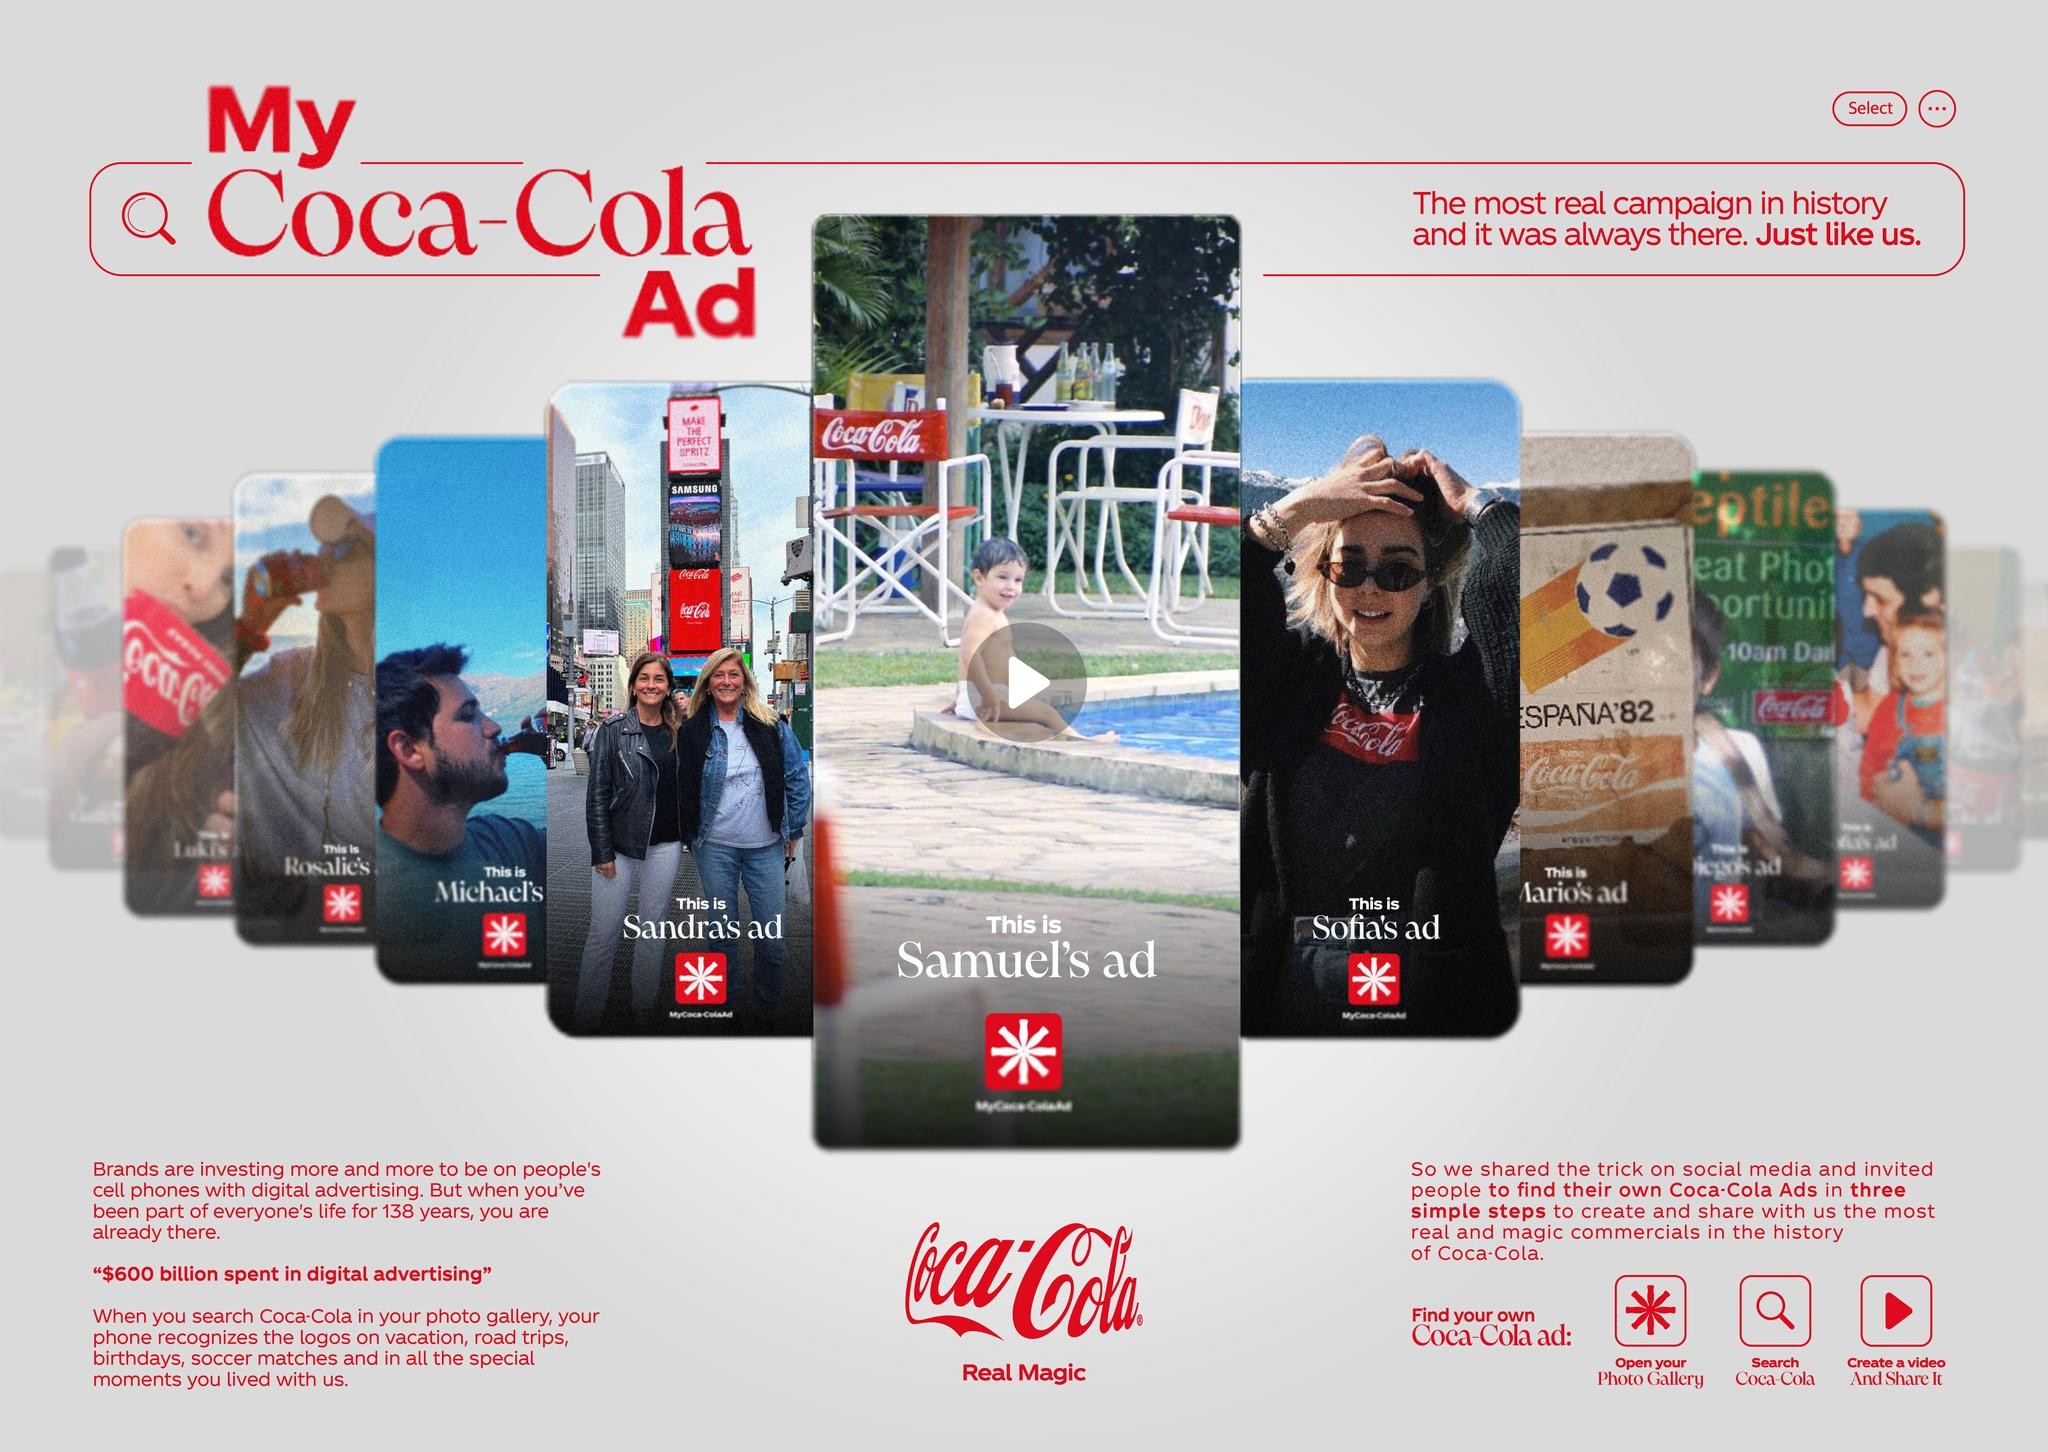 My Coca-Cola Ad